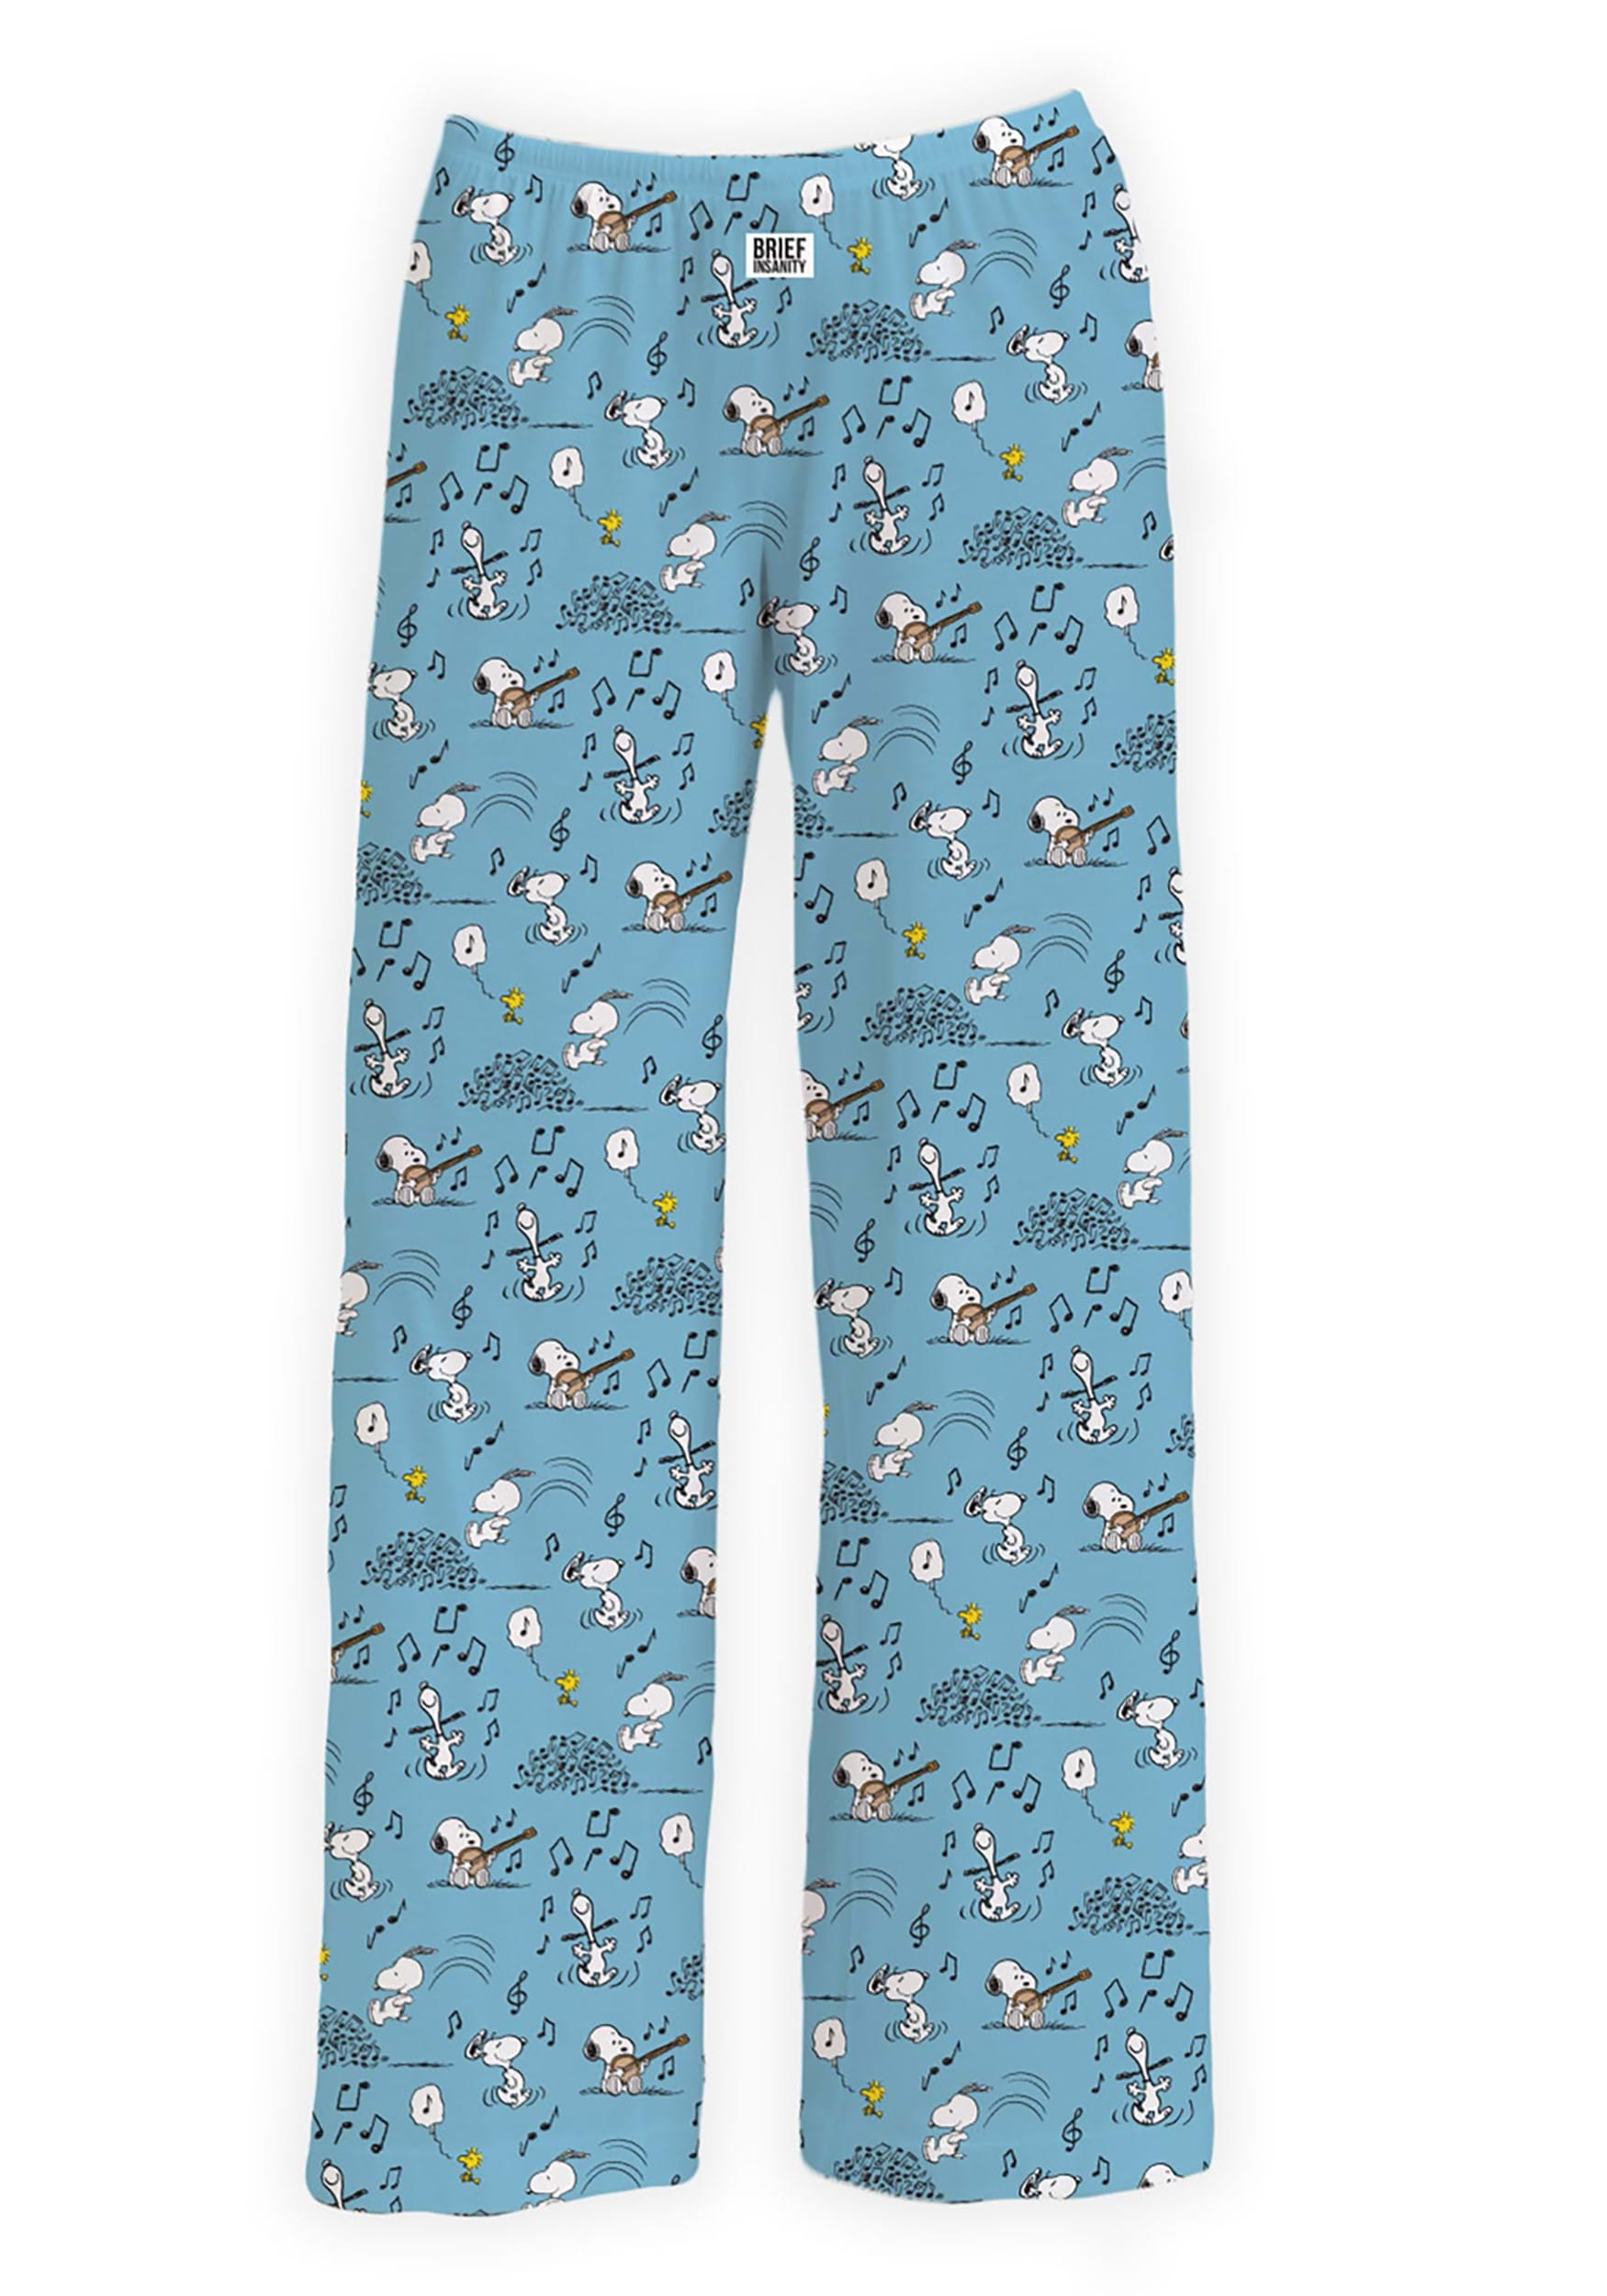 Snoopy Musical Pajama Pants